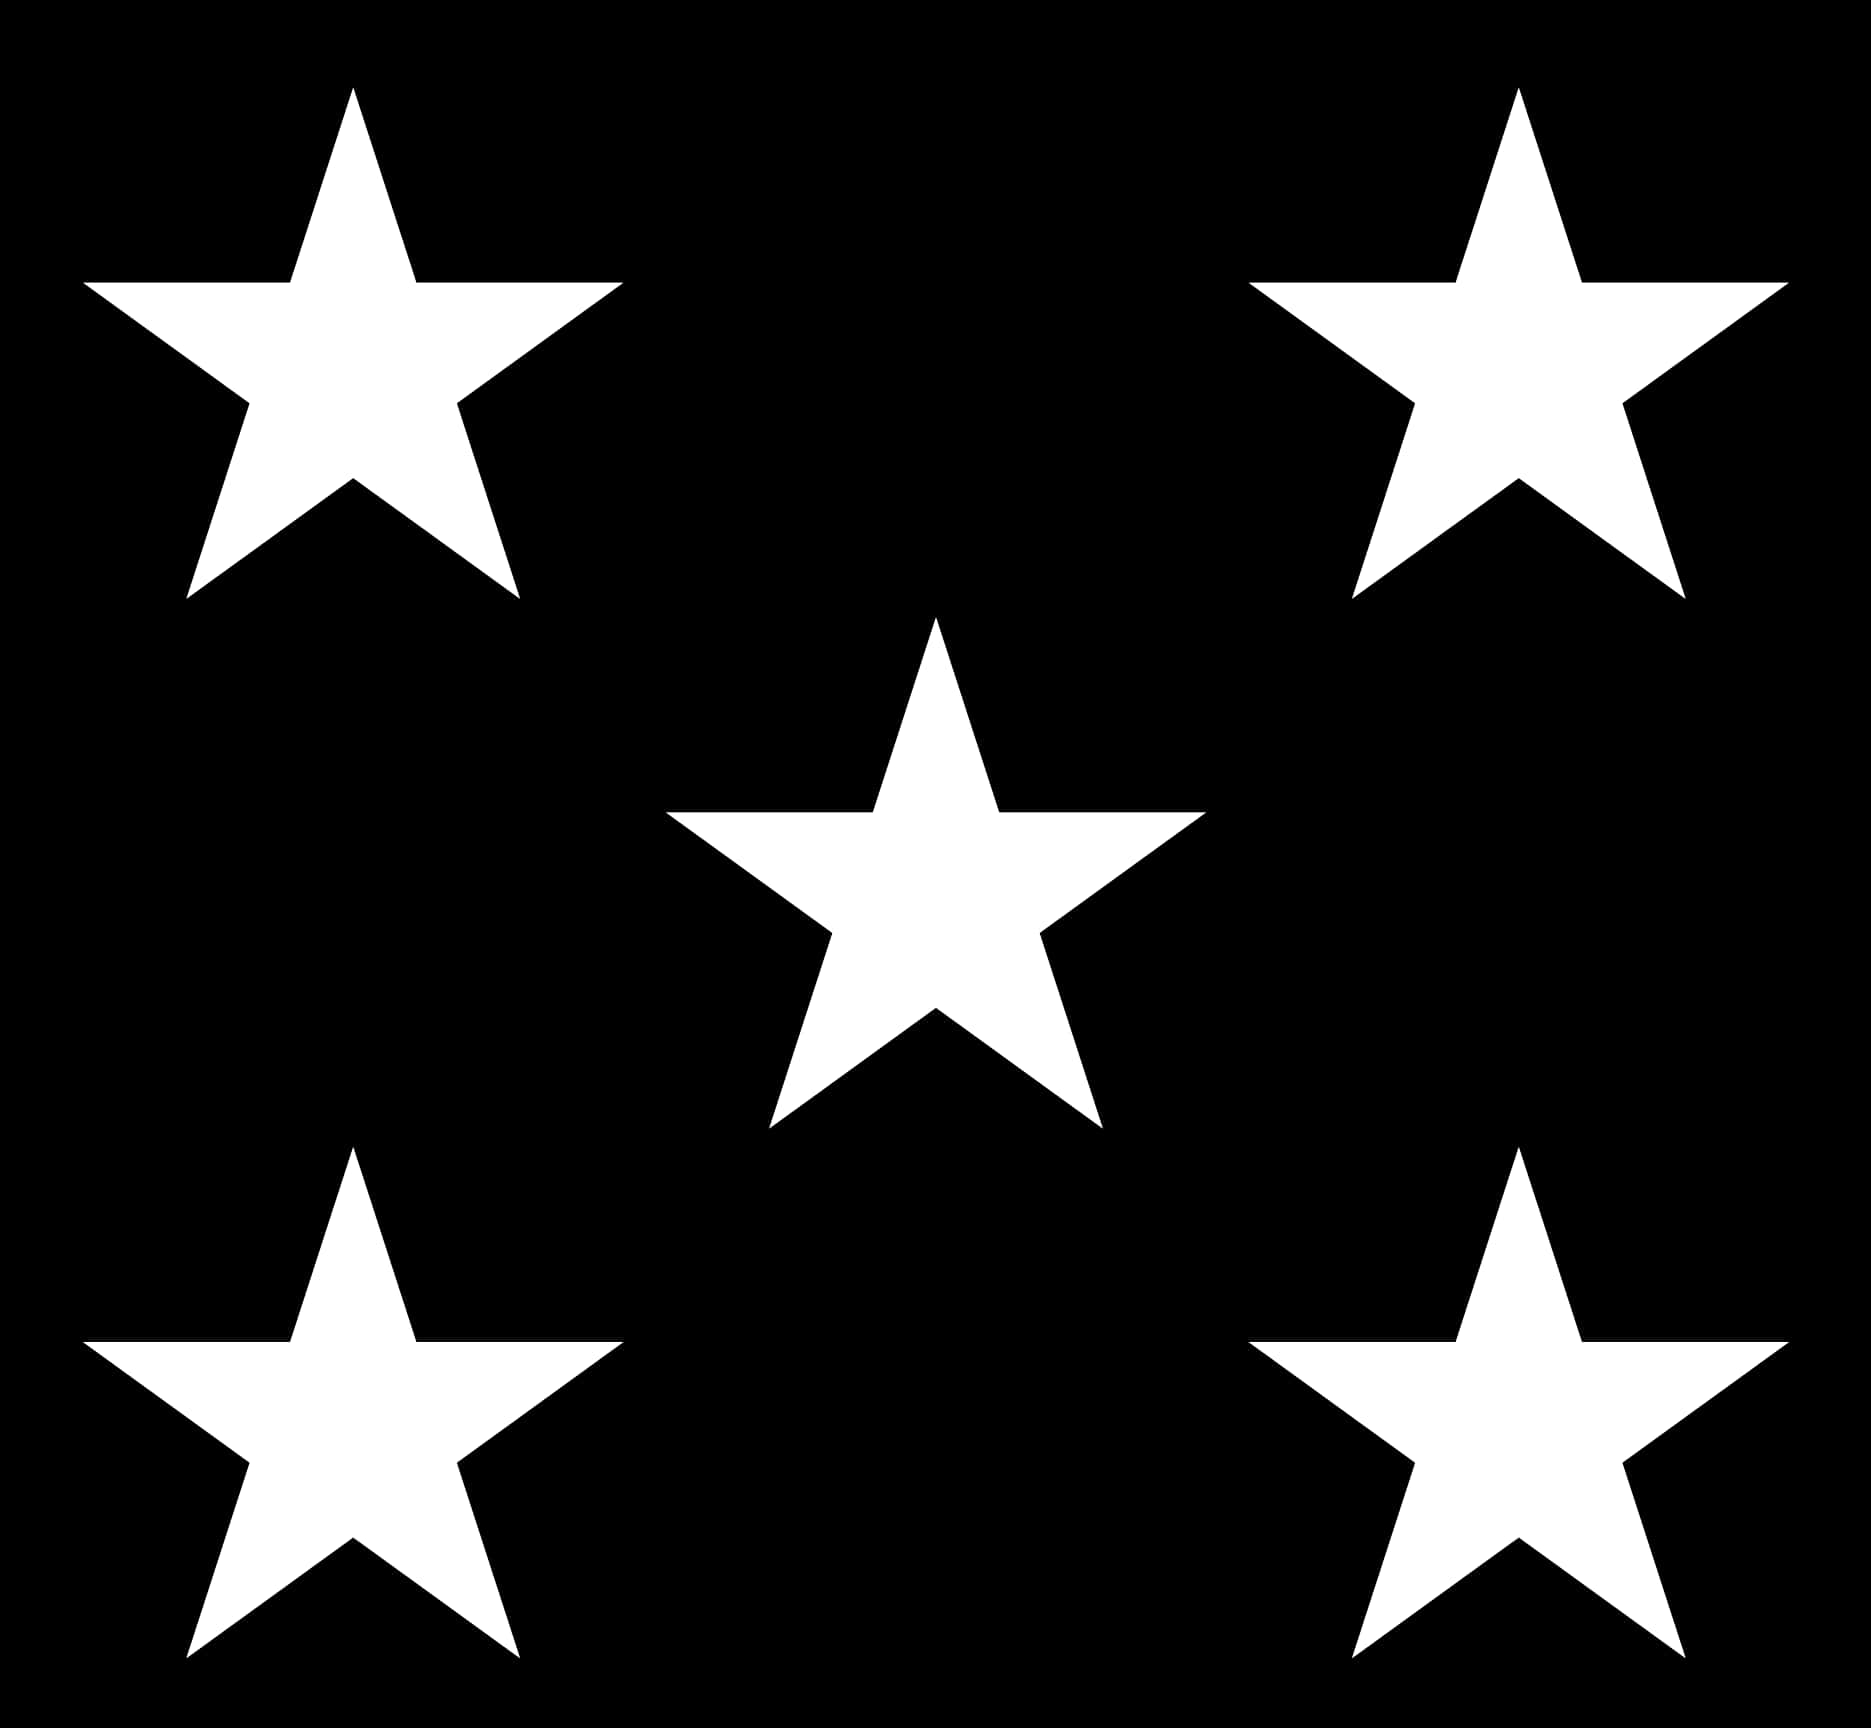 Five White Stars Black Background